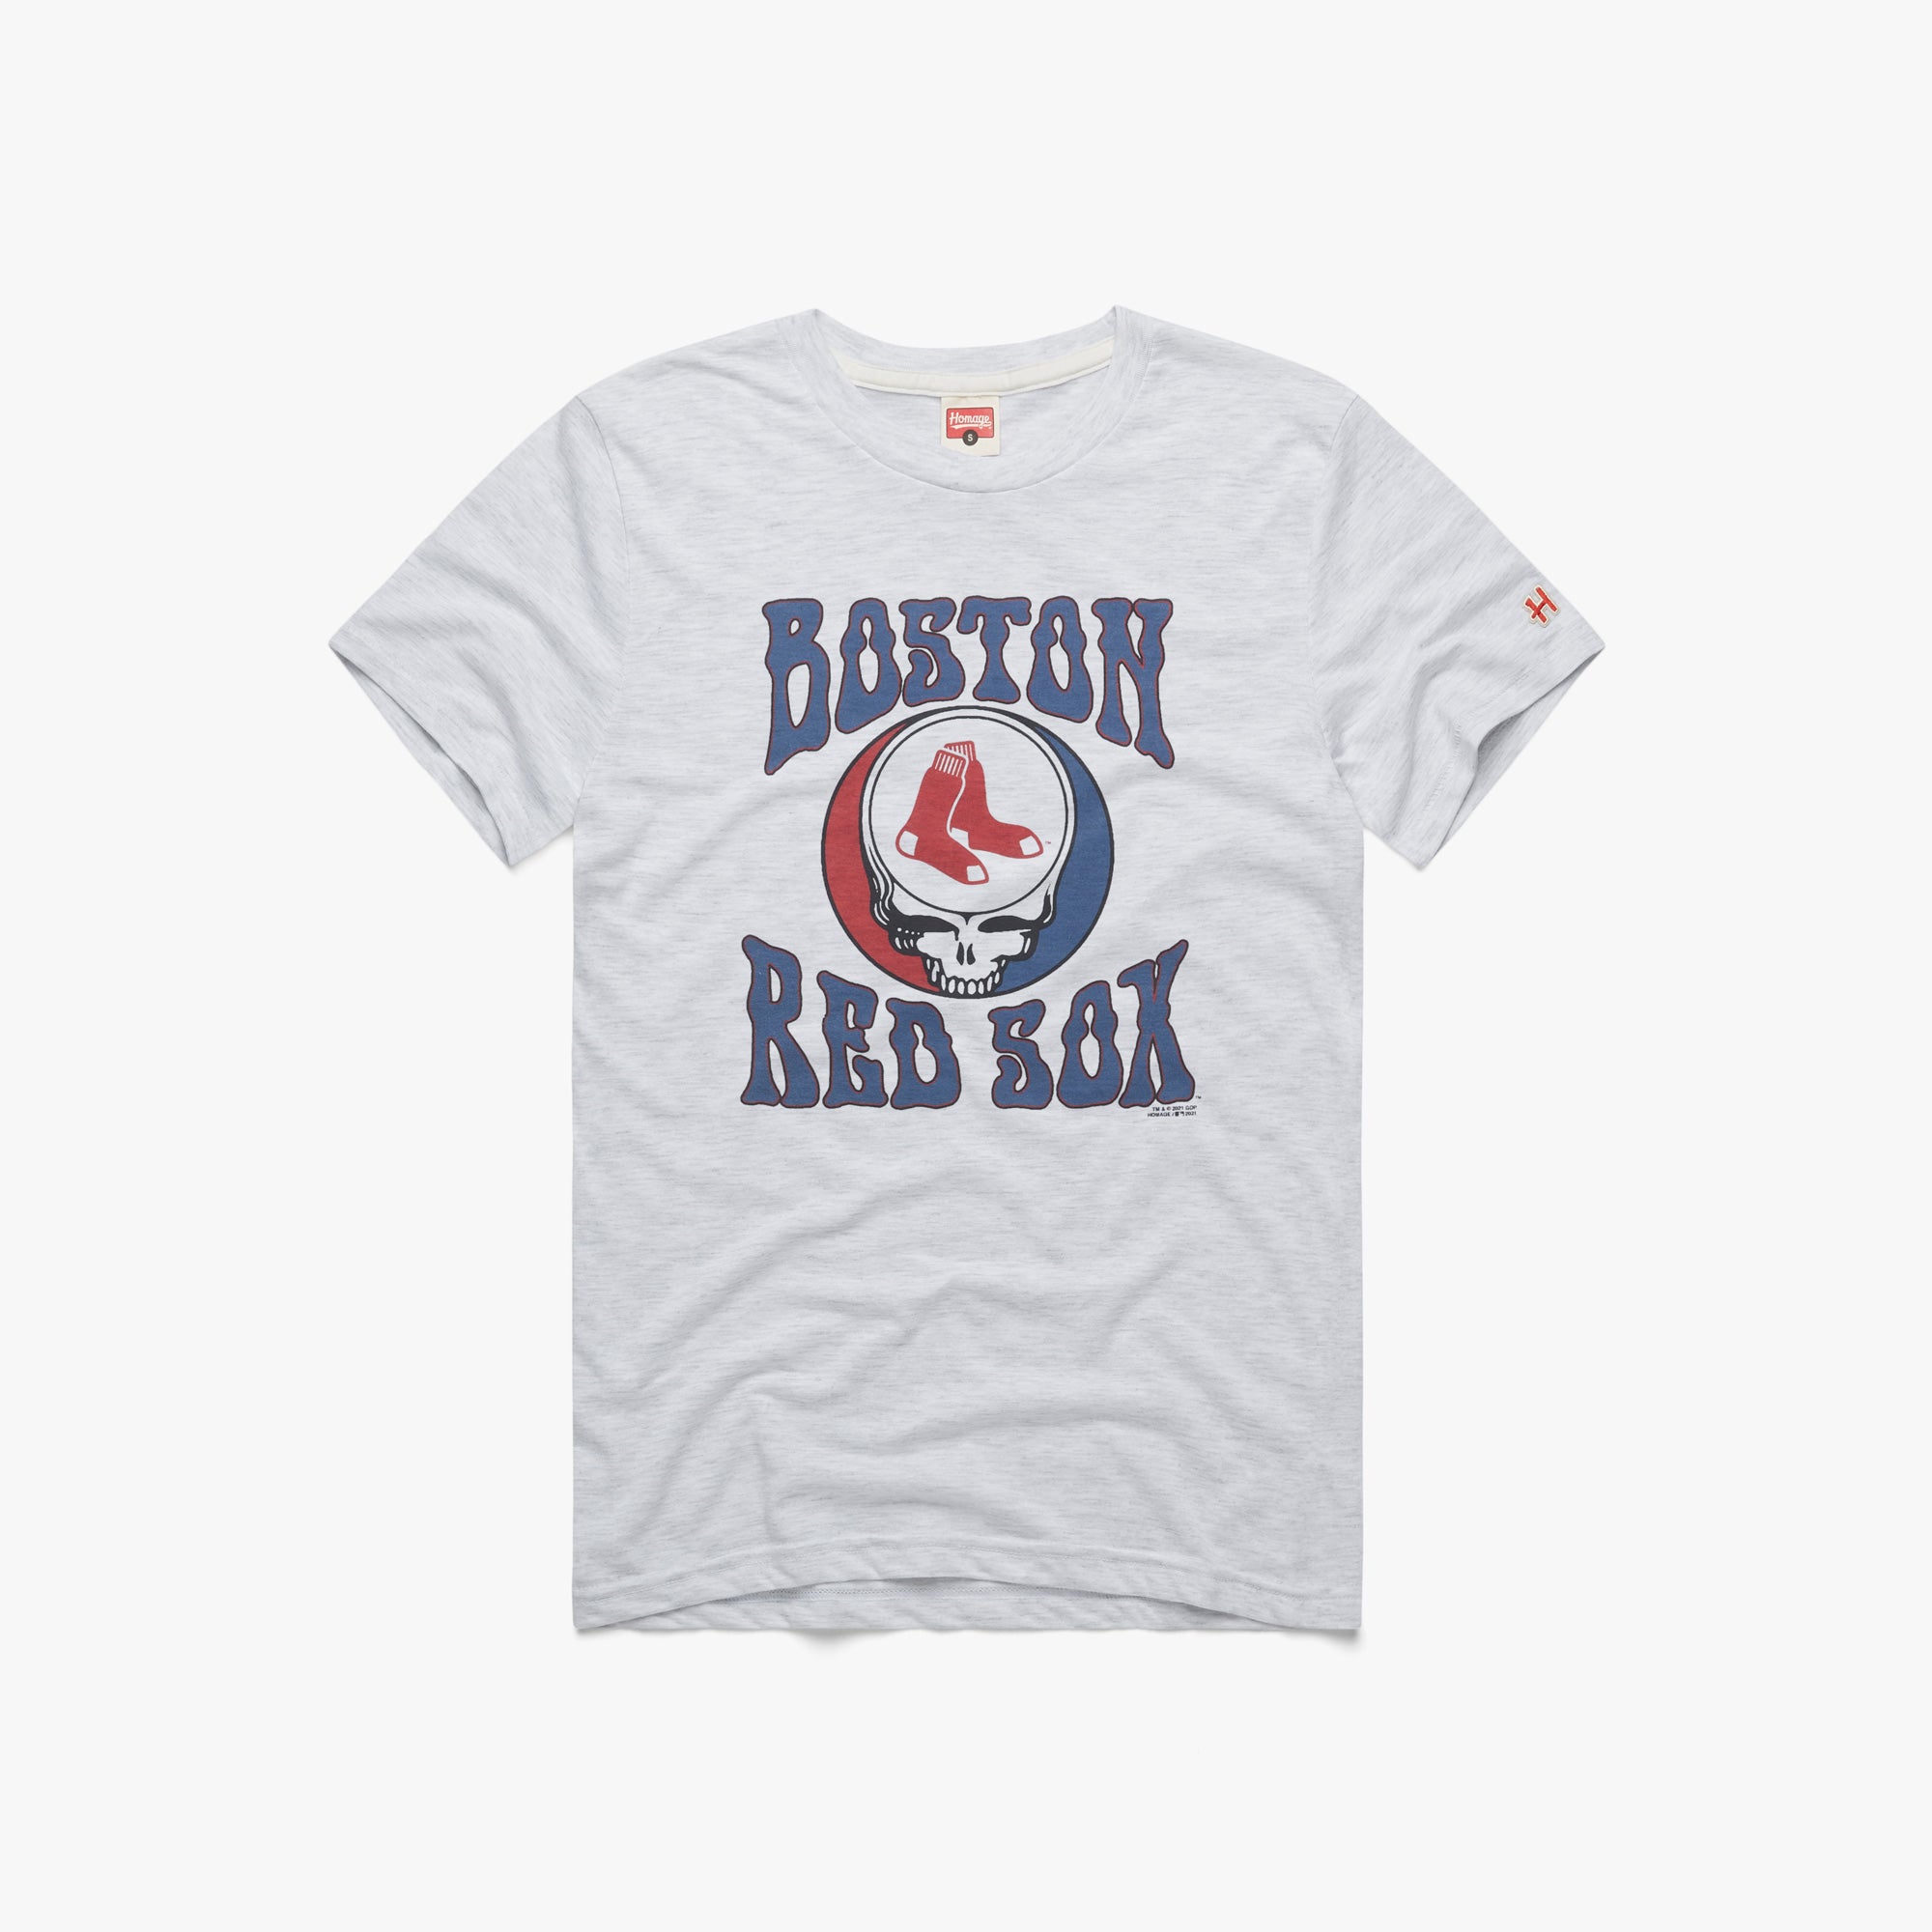 Men's Texas Rangers Homage Royal Grateful Dead Tri-Blend T-Shirt